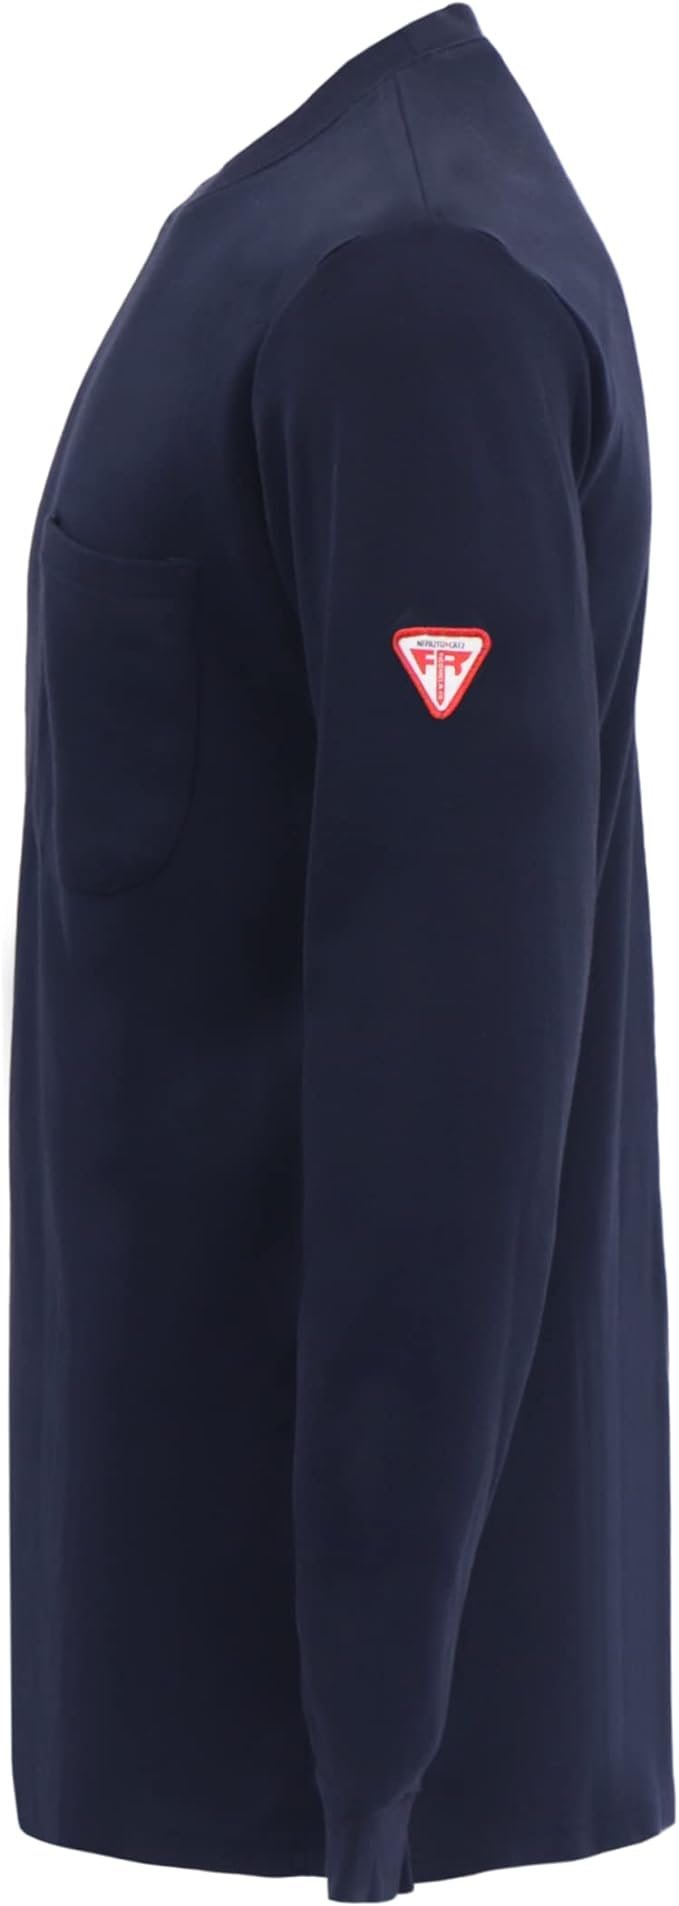 1 TICOMELA FR Shirts for Men Flame Resistant Shirt NFPA2112/CAT2 7oz Fire Retardant Men's Long Sleeve Henley Shirts